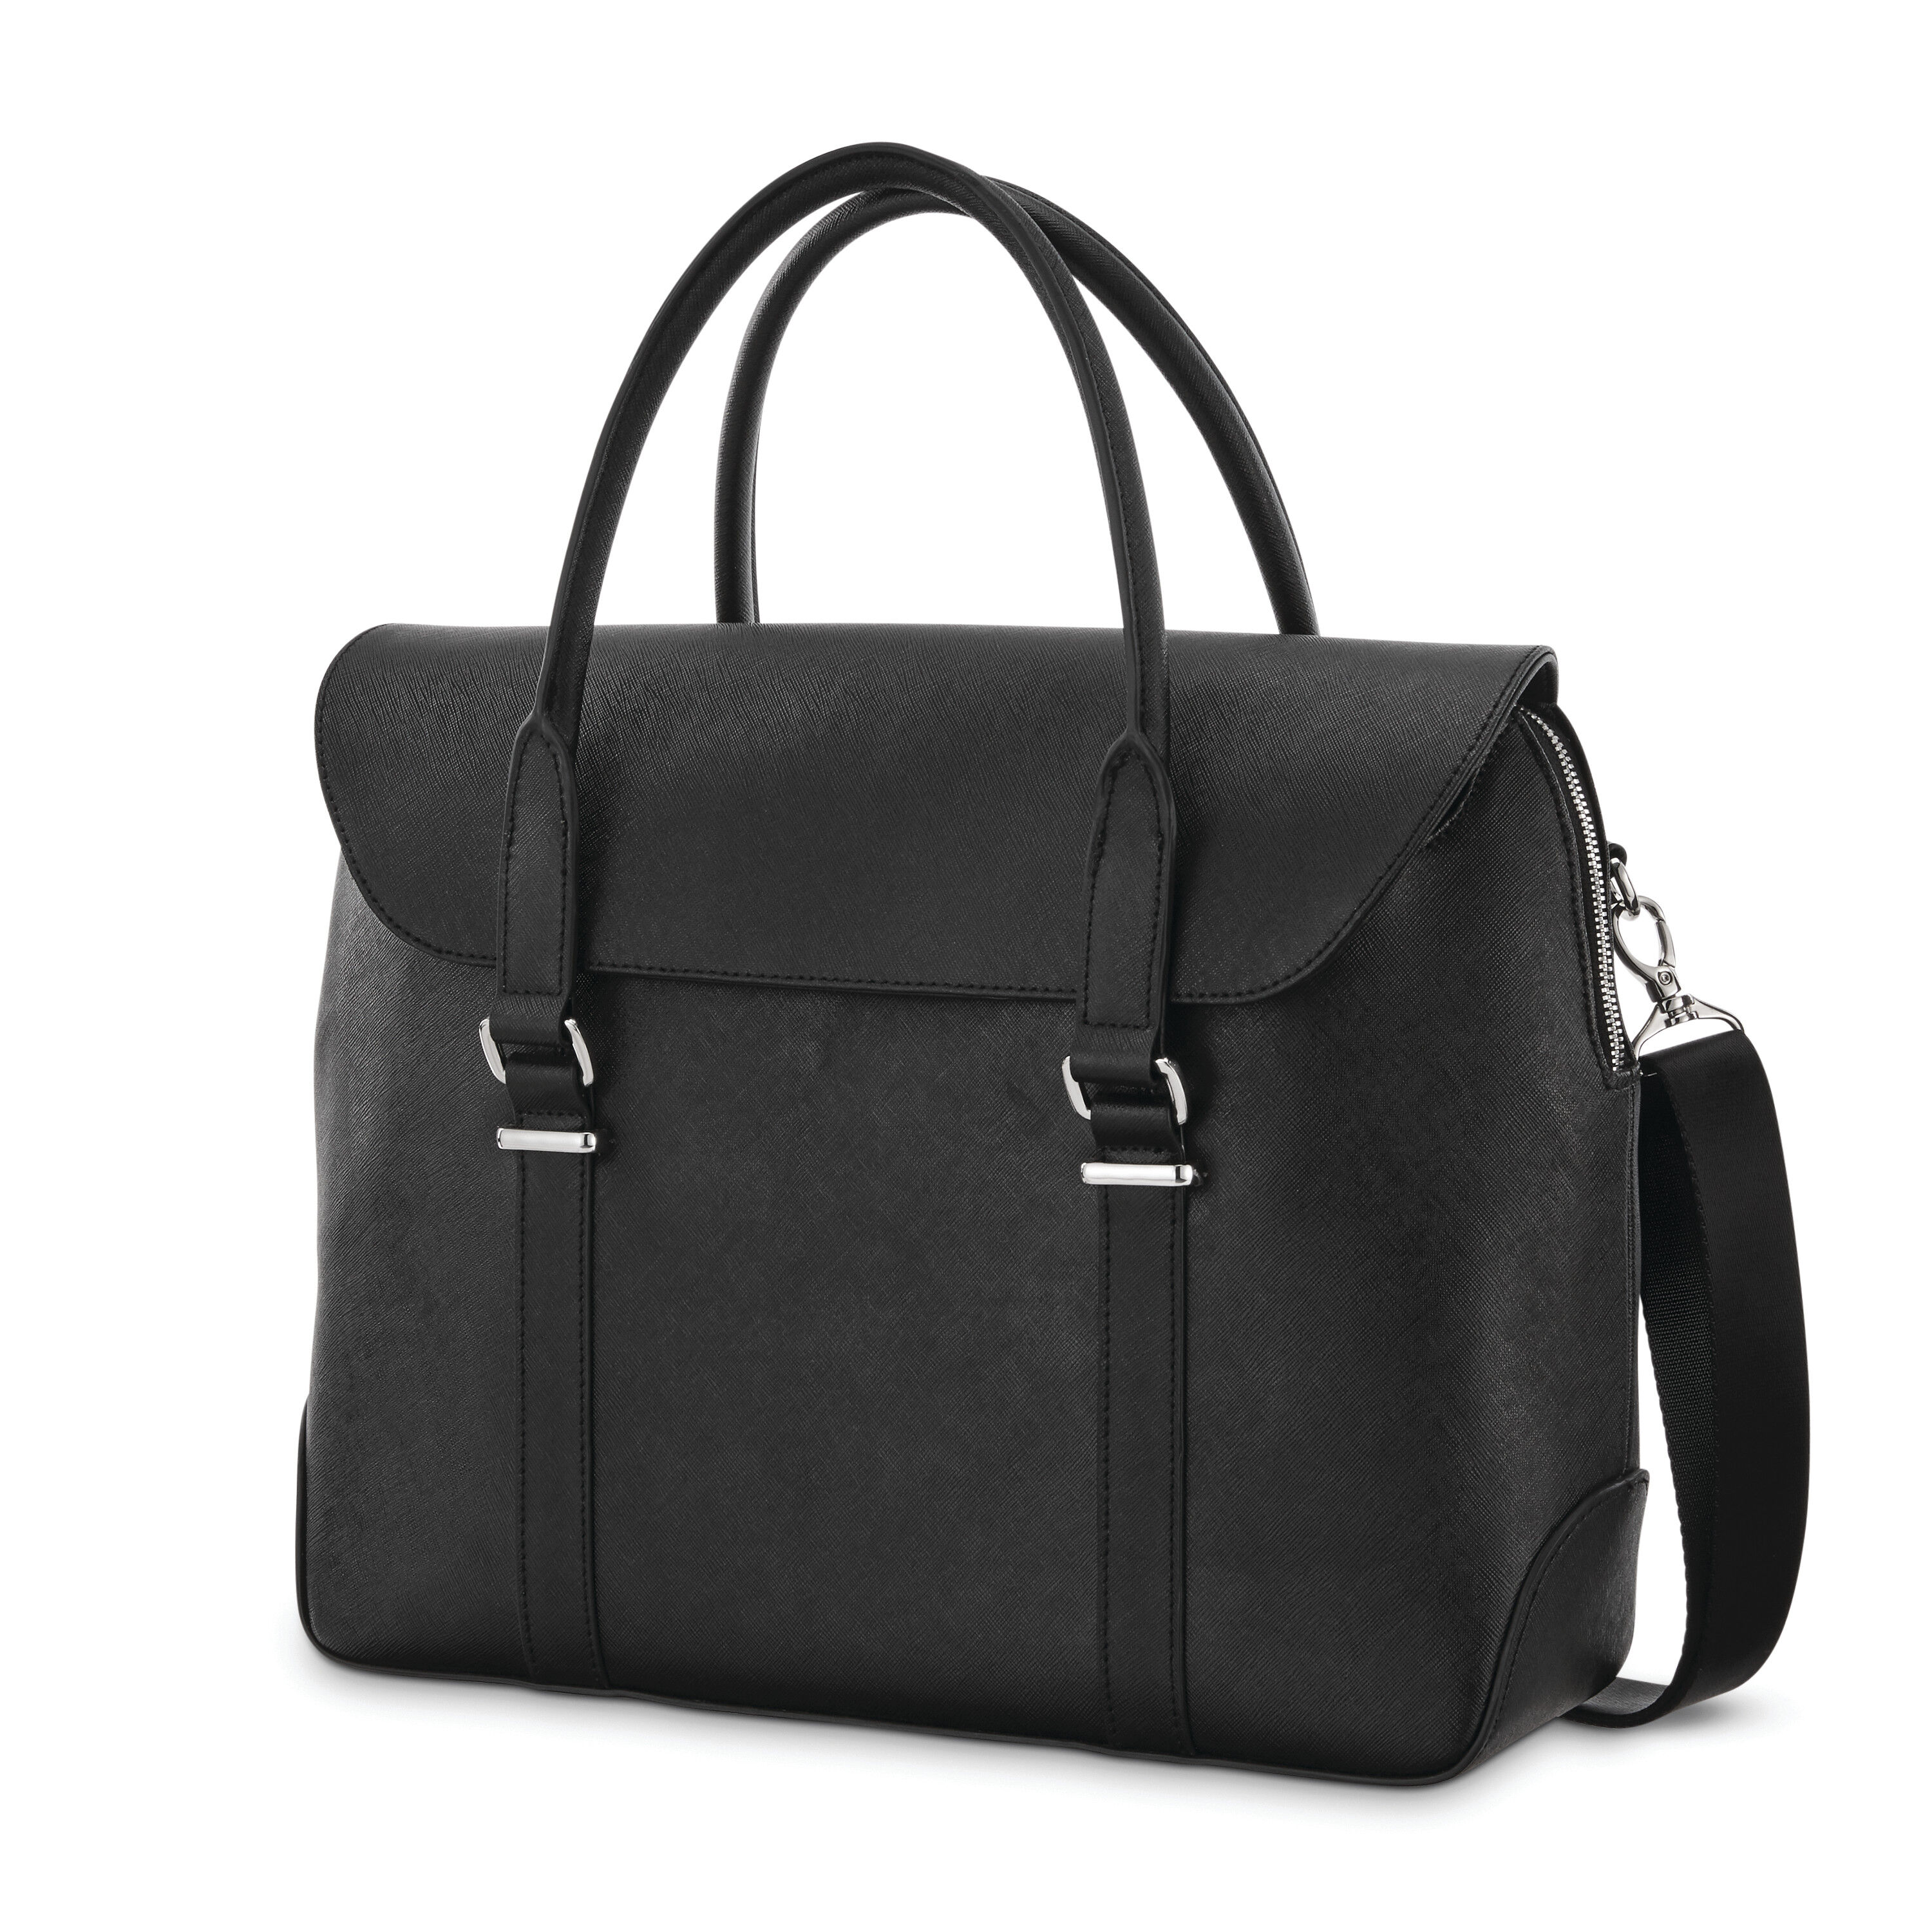 Samsonite Handbags  Encompass Convertible Handbag Review